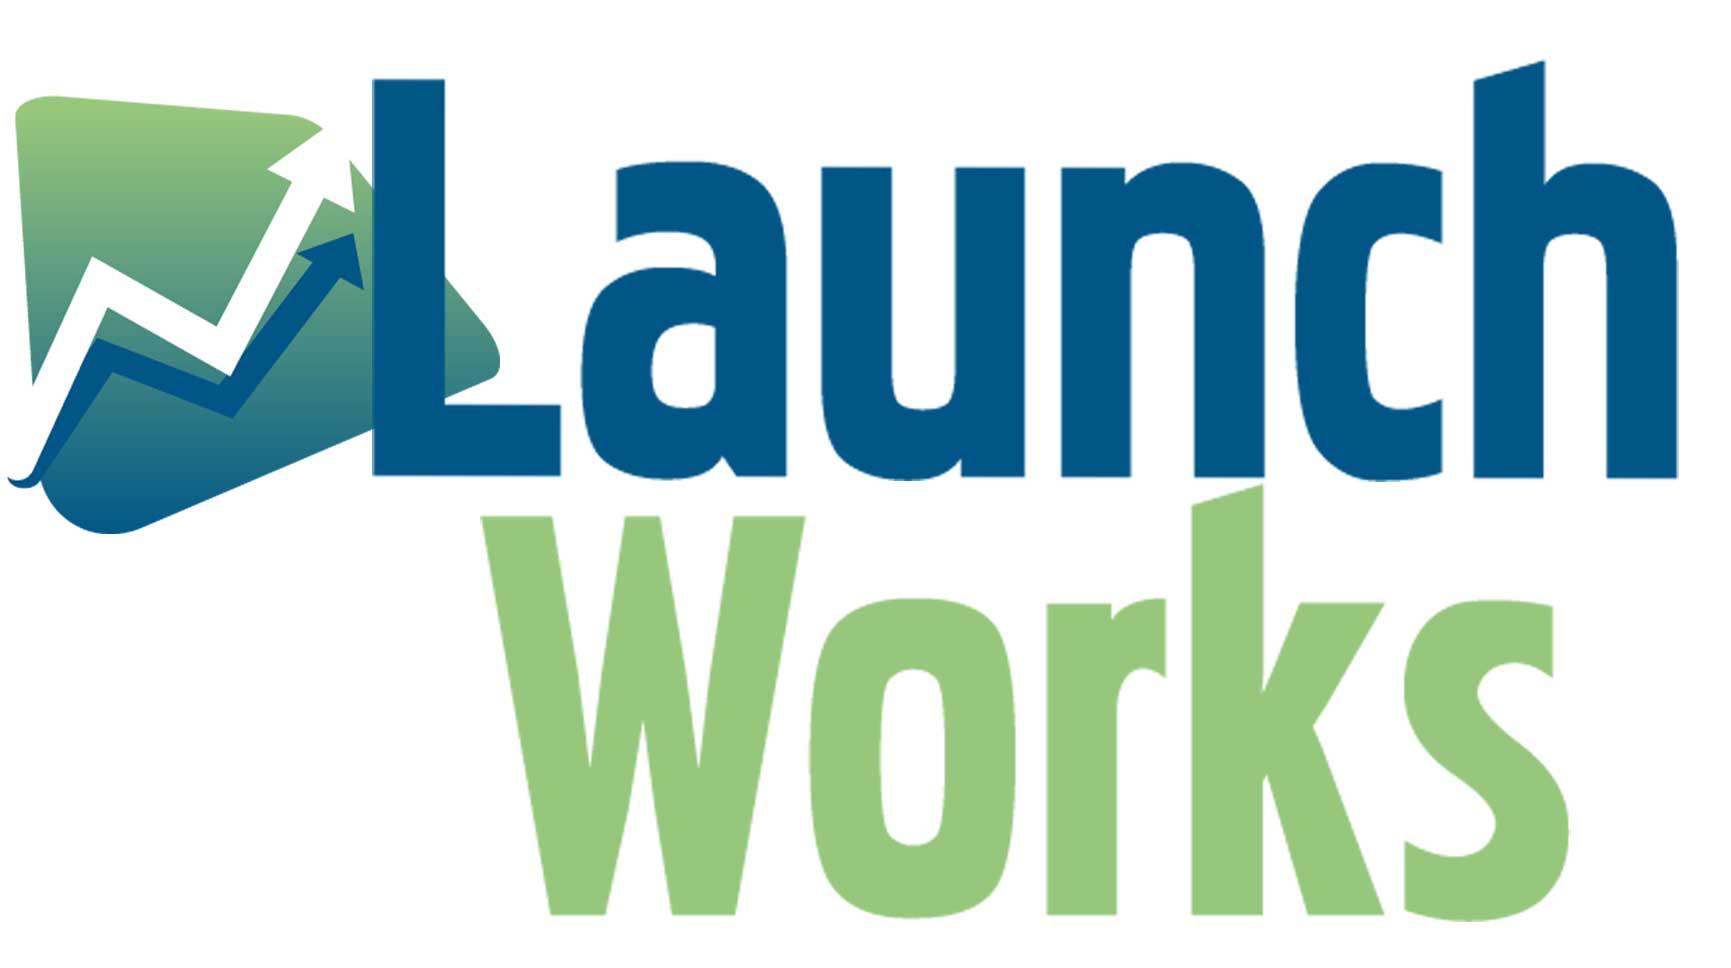 LaunchWorks